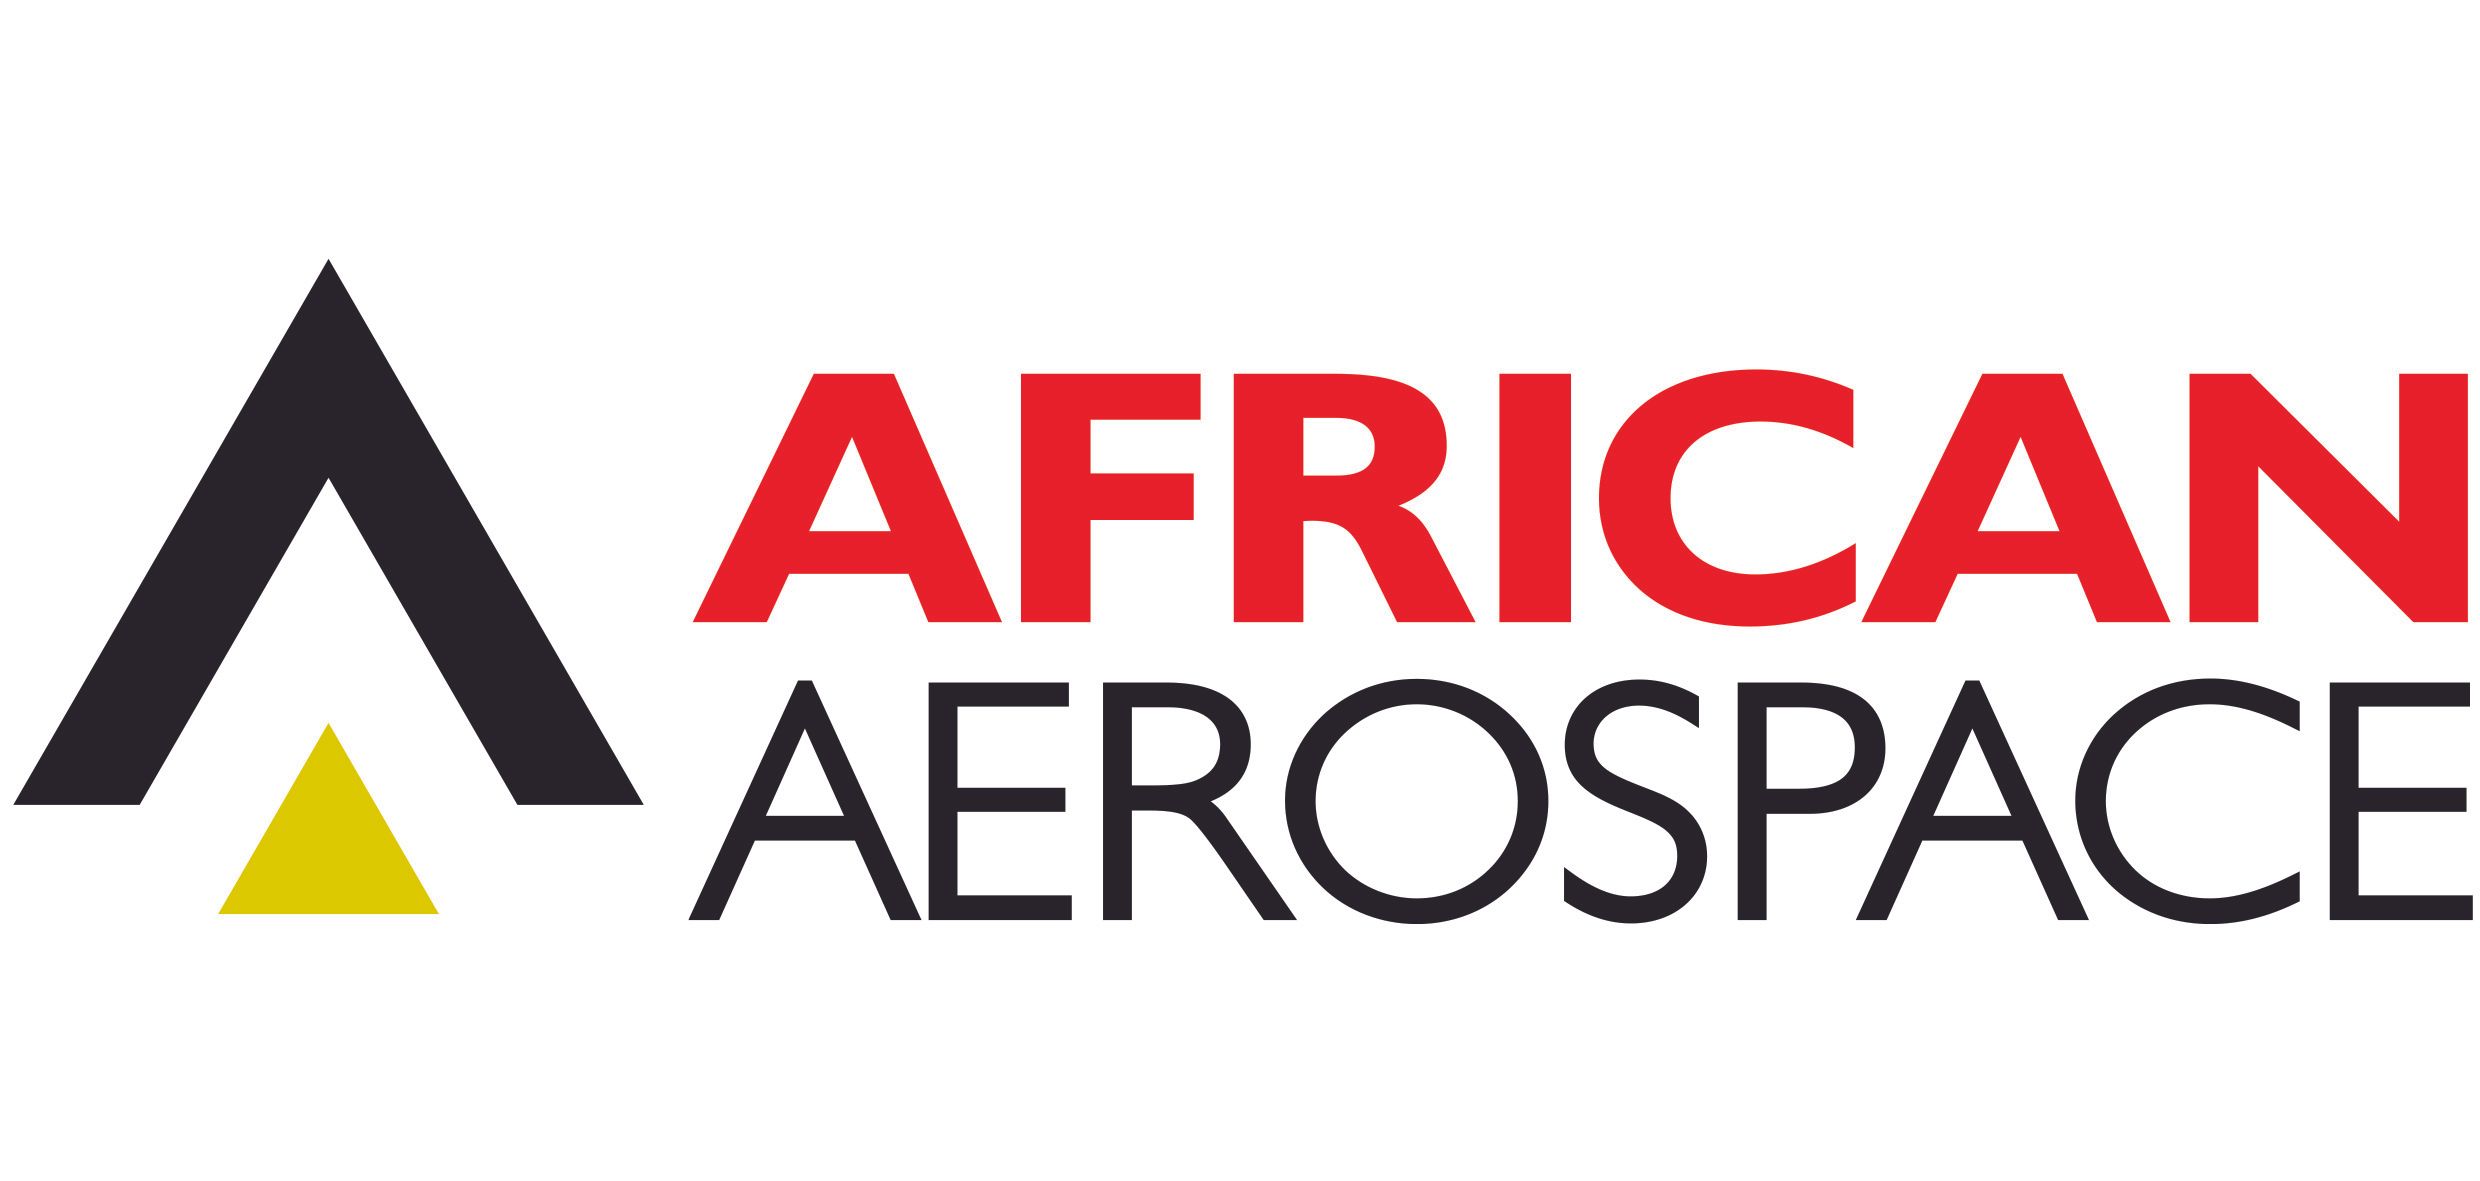 African Aerospace 